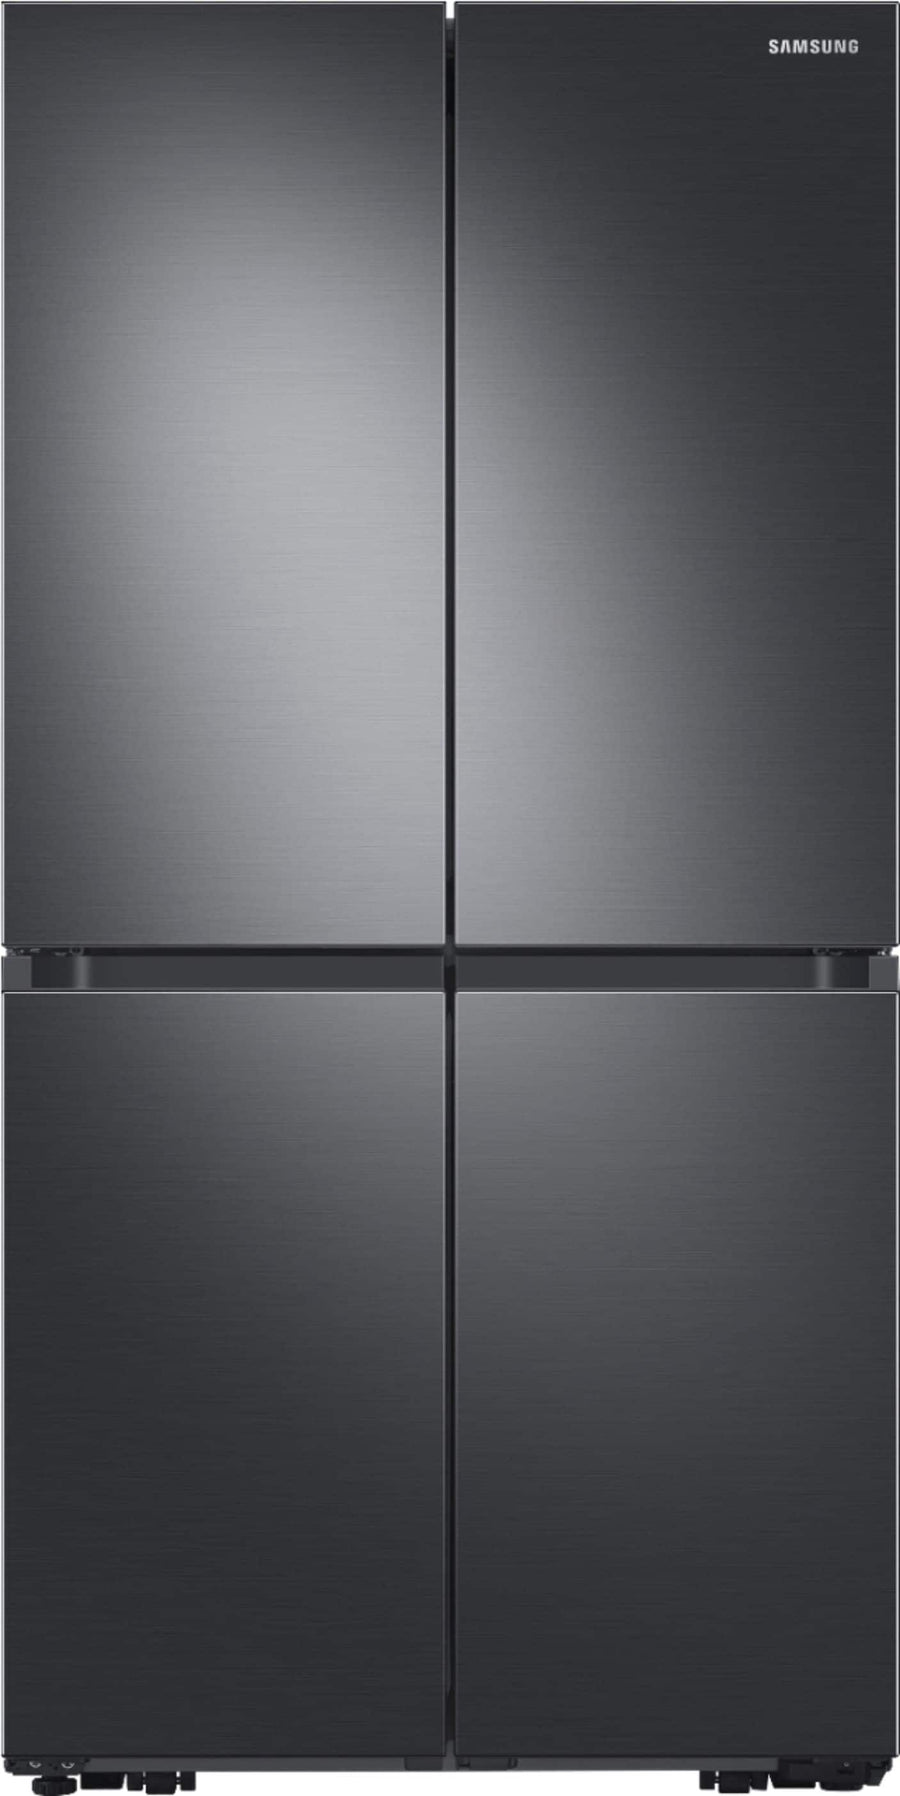 Samsung - 23 cu. ft. 4-Door Flex French Door Counter-Depth Refrigerator with WiFi, AutoFill Water Pitcher & Dual Ice Maker - Black stainless steel_0